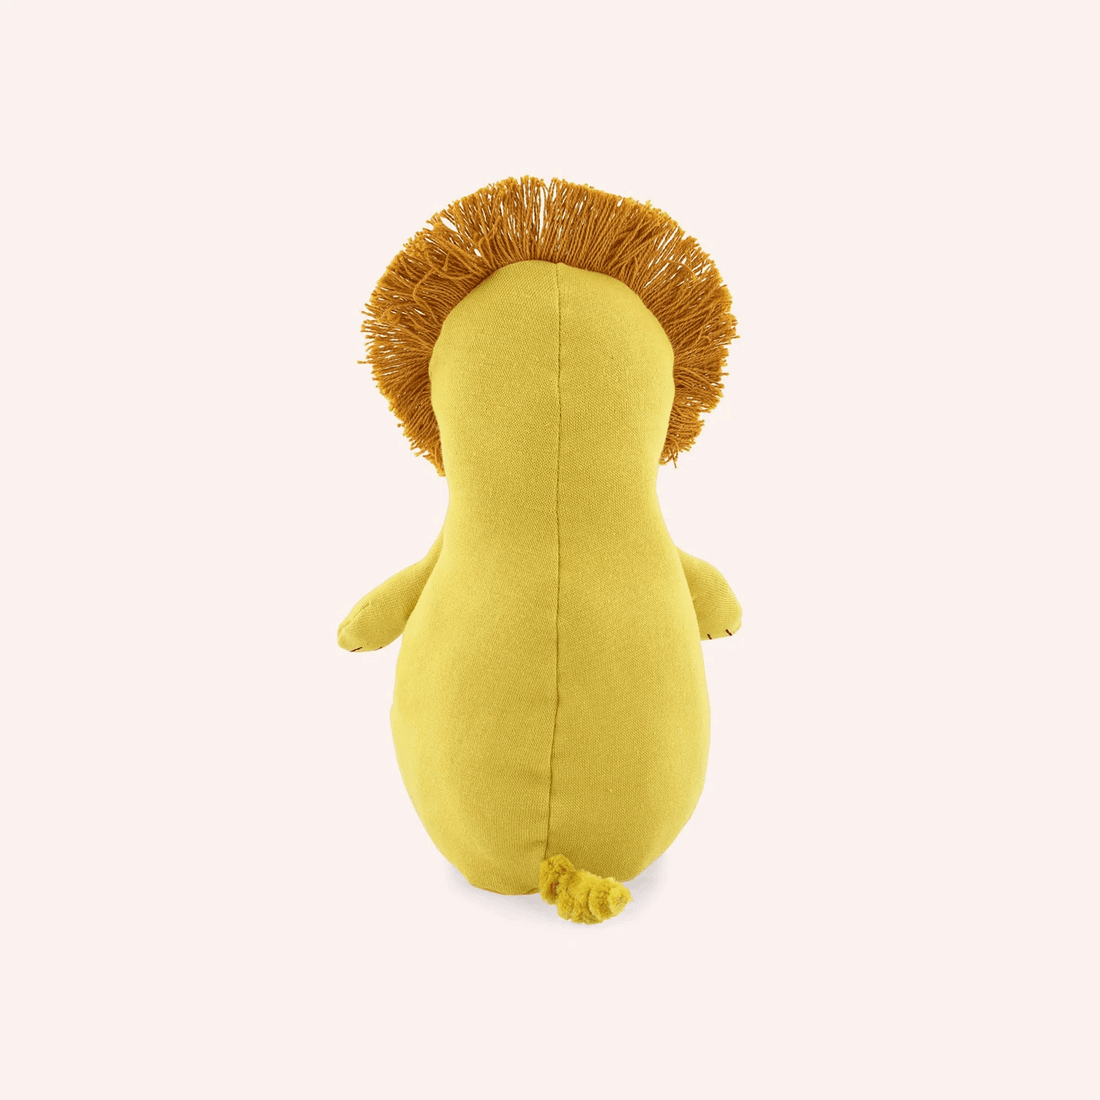 Plush Toy - Mr. Lion